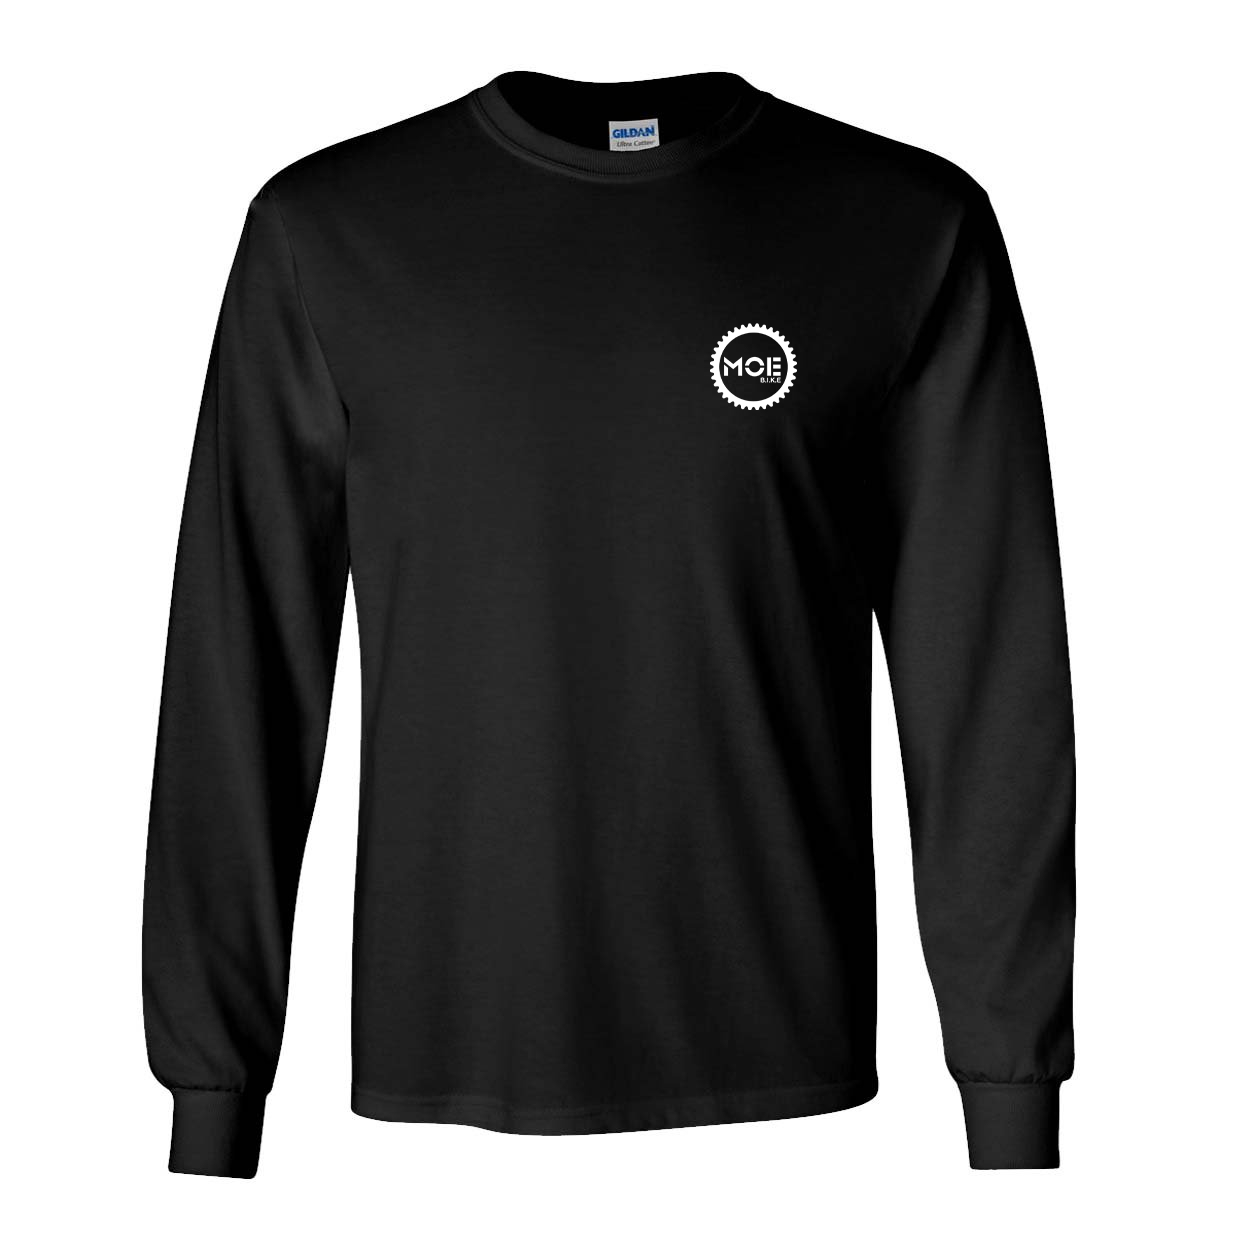 Moe Bike Night Out Long Sleeve T-Shirt Black (White Logo)